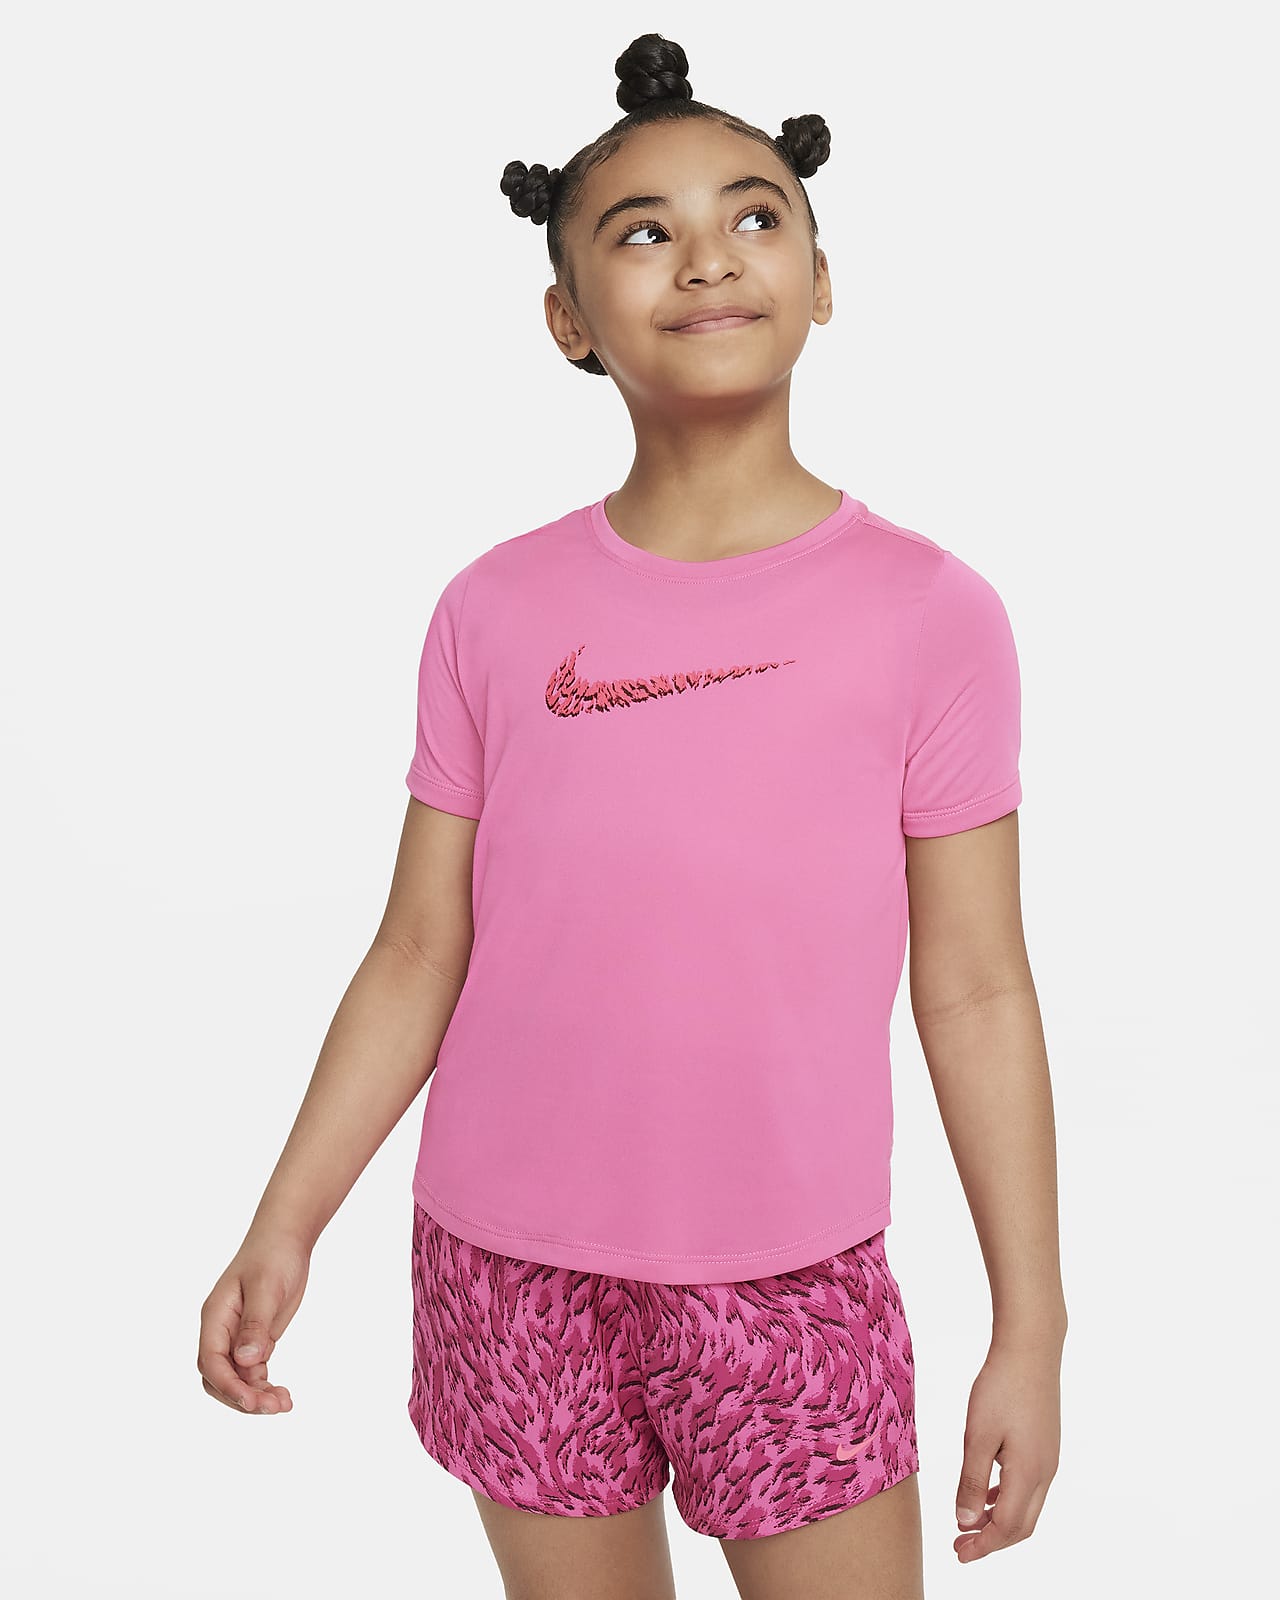 Nike One Older Kids' (Girls') Short-Sleeve Training Top